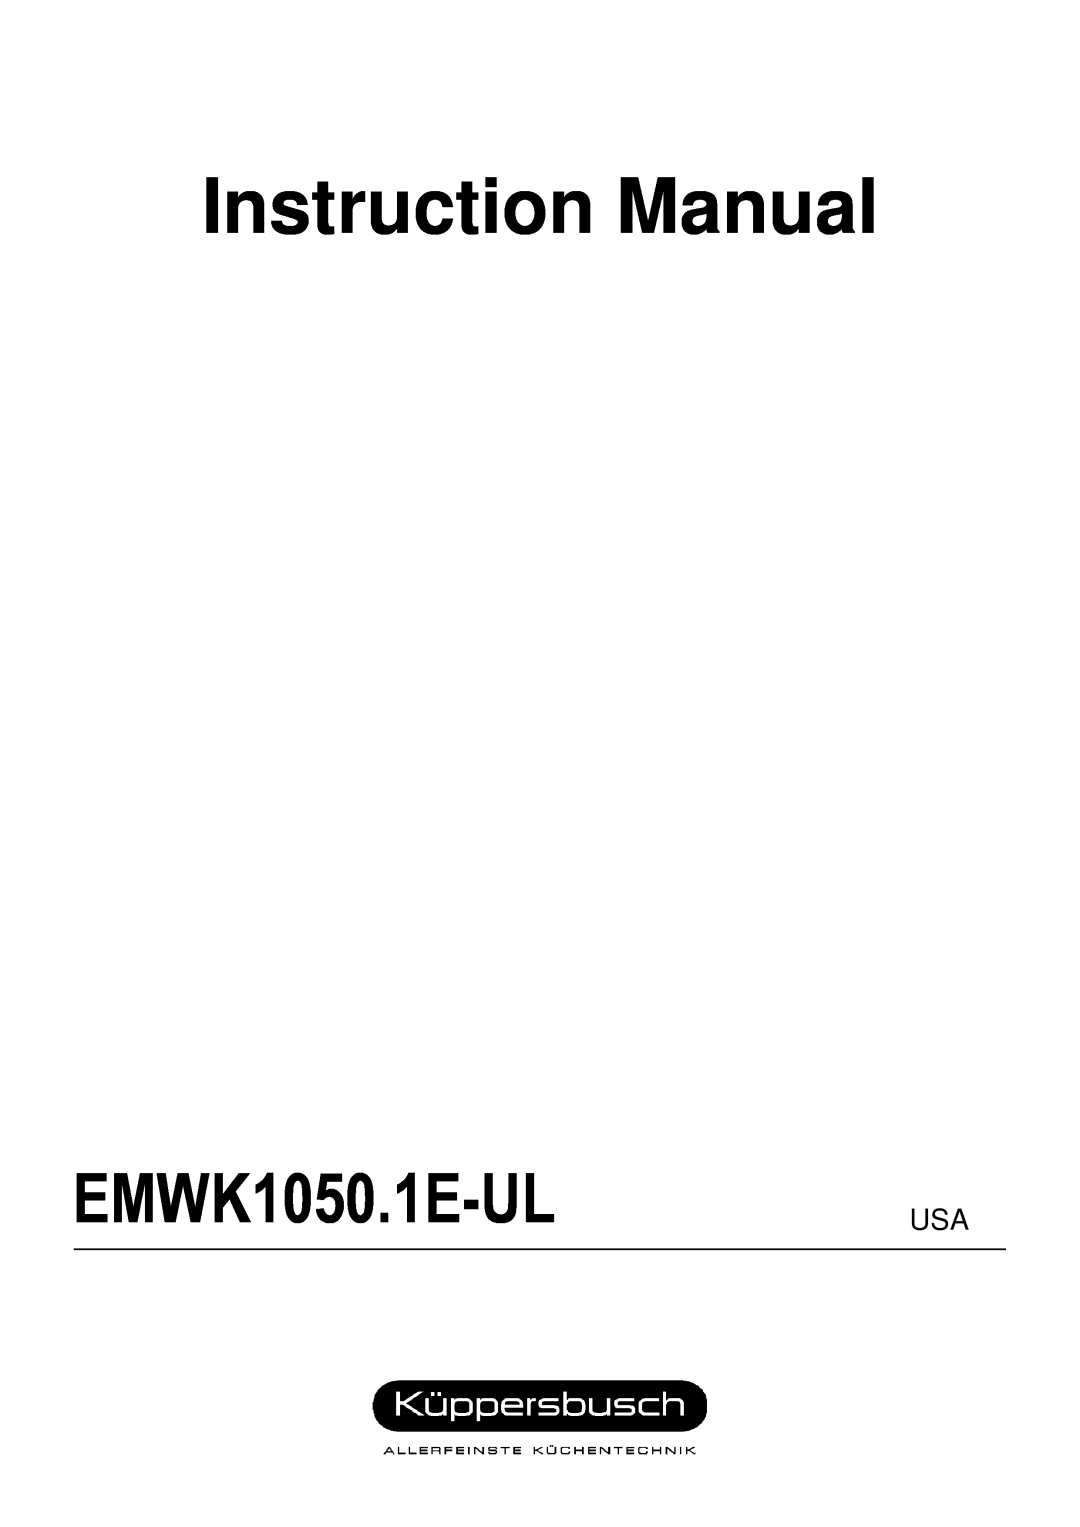 Kuppersbusch USA EMWK1050.1E-UL instruction manual Instruction Manual 